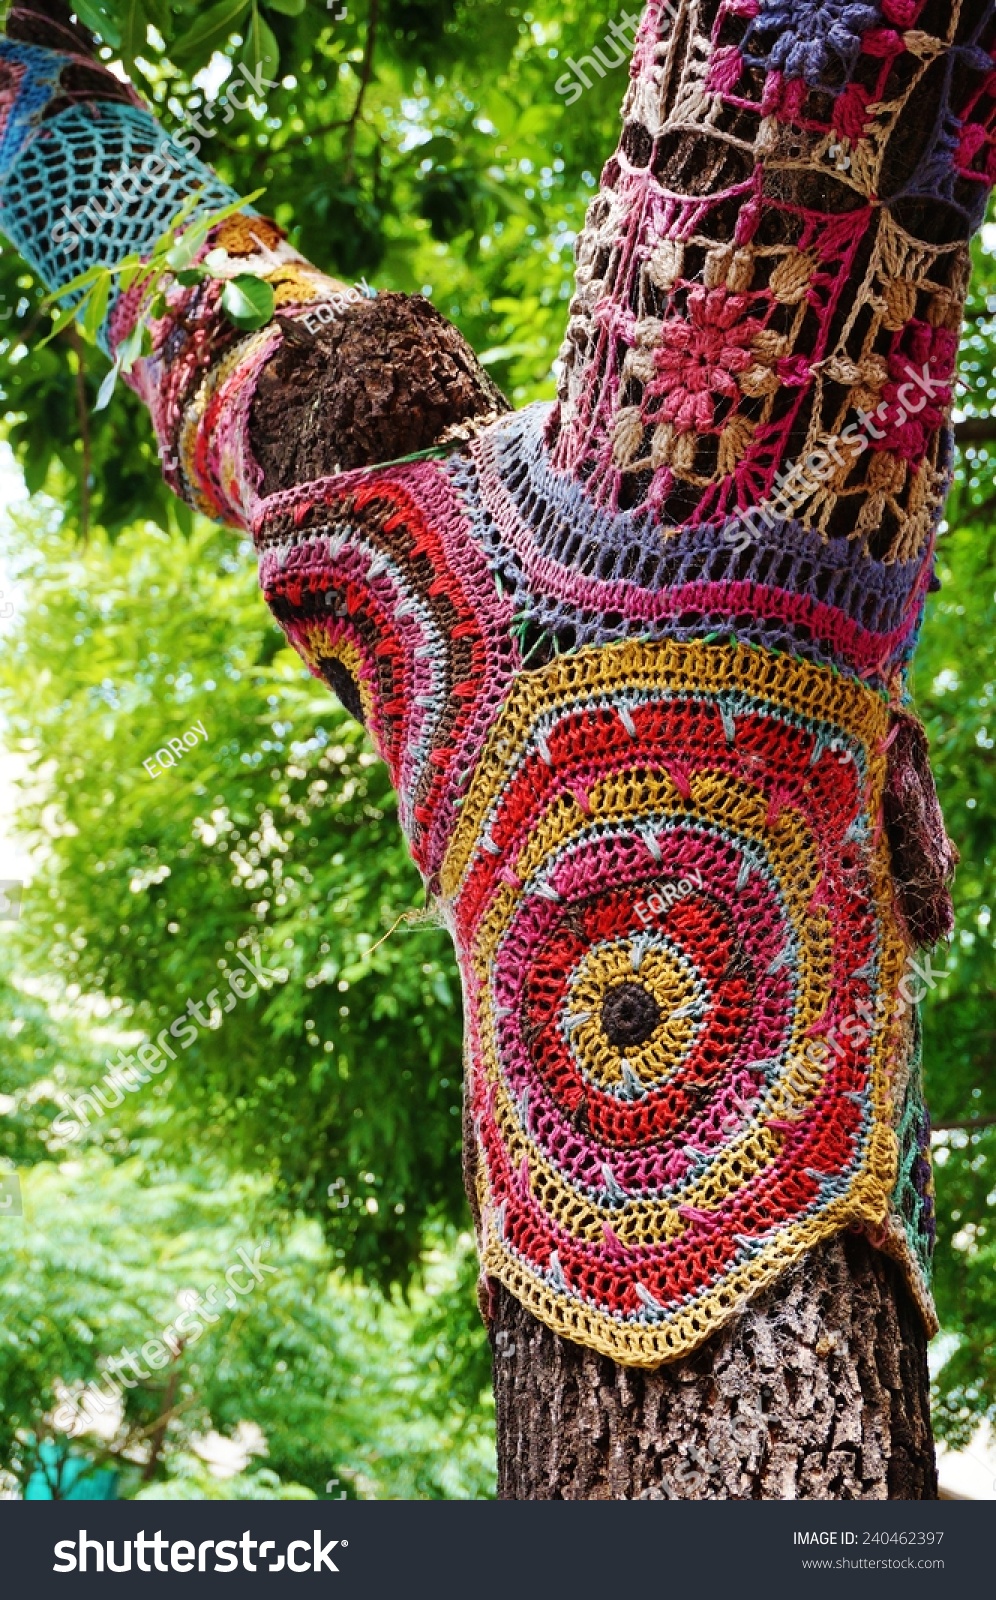 Colorful Crochet Knit On Tree Trunk Stock Photo 240462397 - Shutterstock